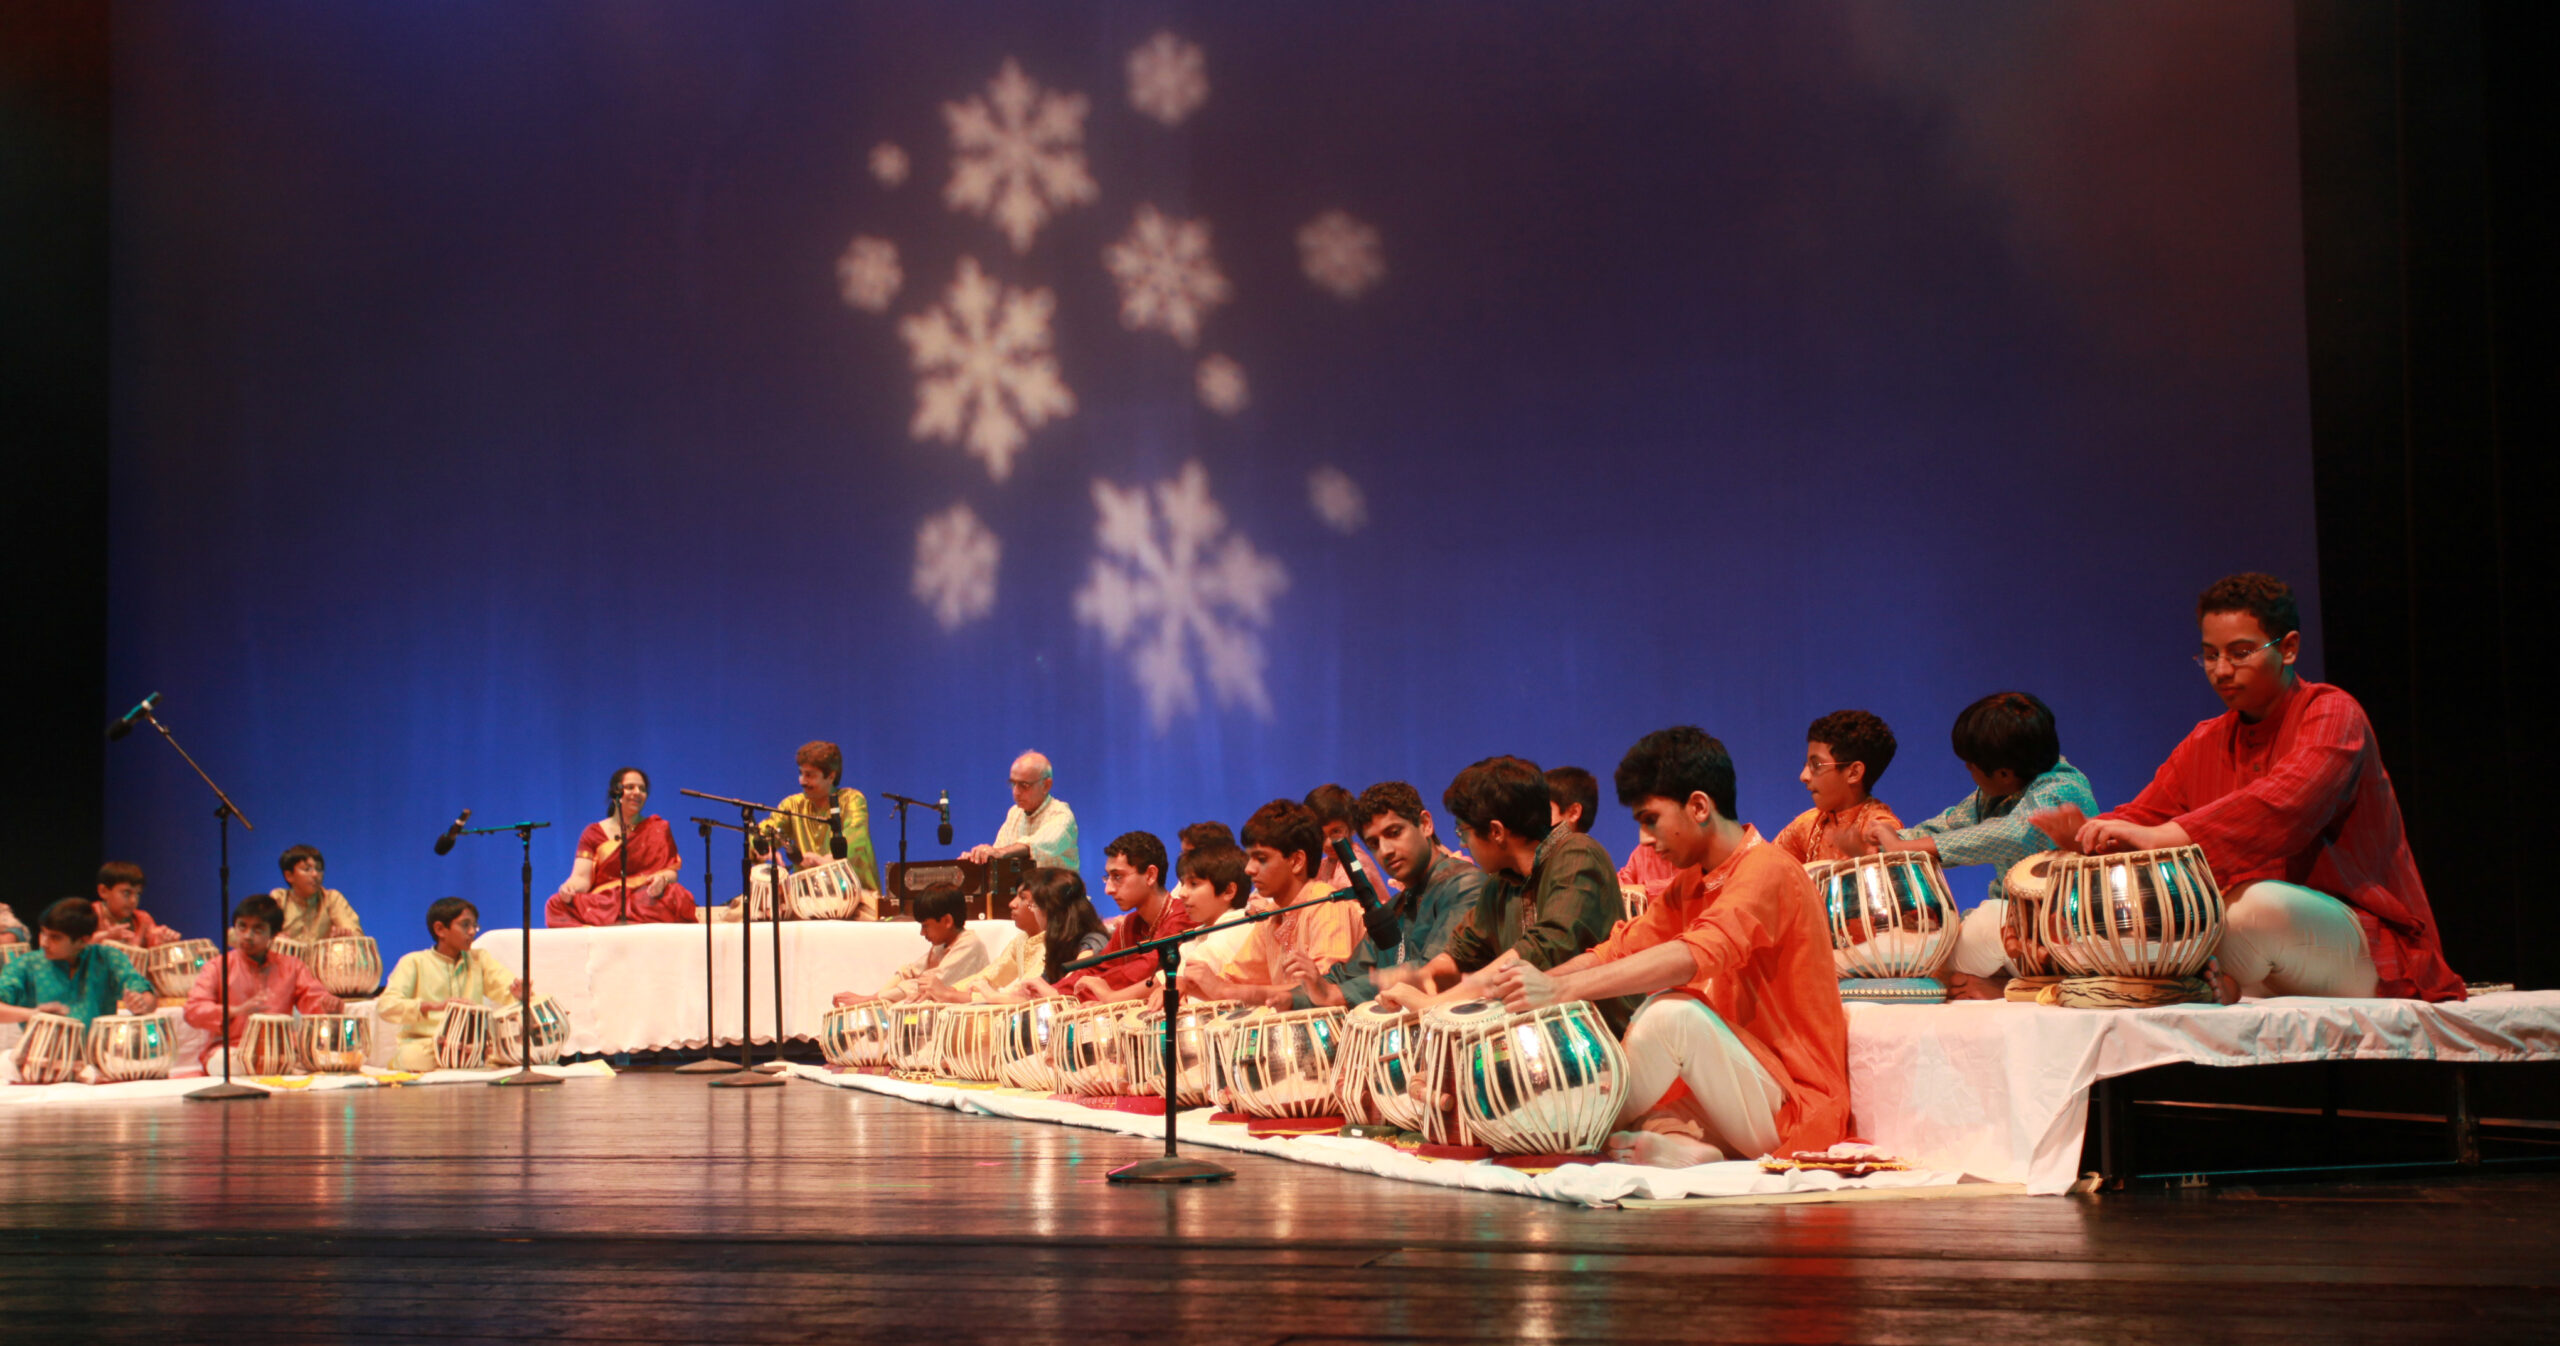 40 tabla students performing with Tabla Guru Pandit Shantilal Shah during Incredible India at Miller Outdoor Theater